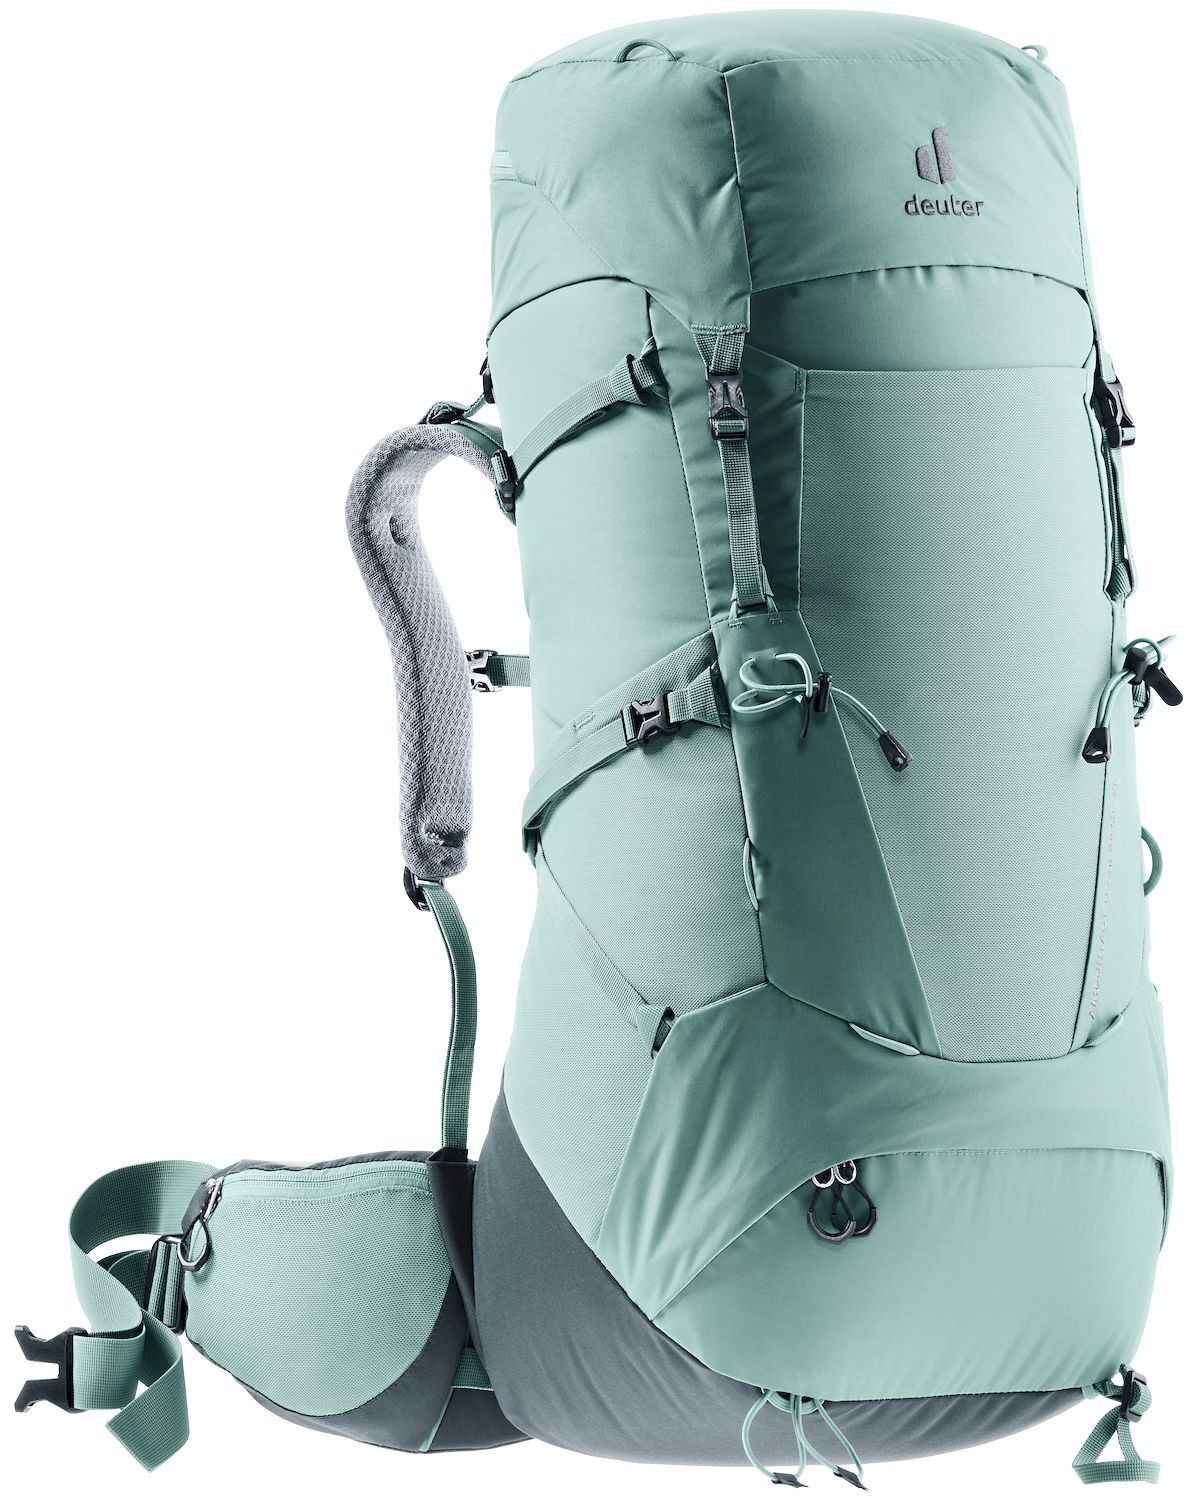 Deuter Aircontact Core 45+10 SL - Hiking backpack - Women's